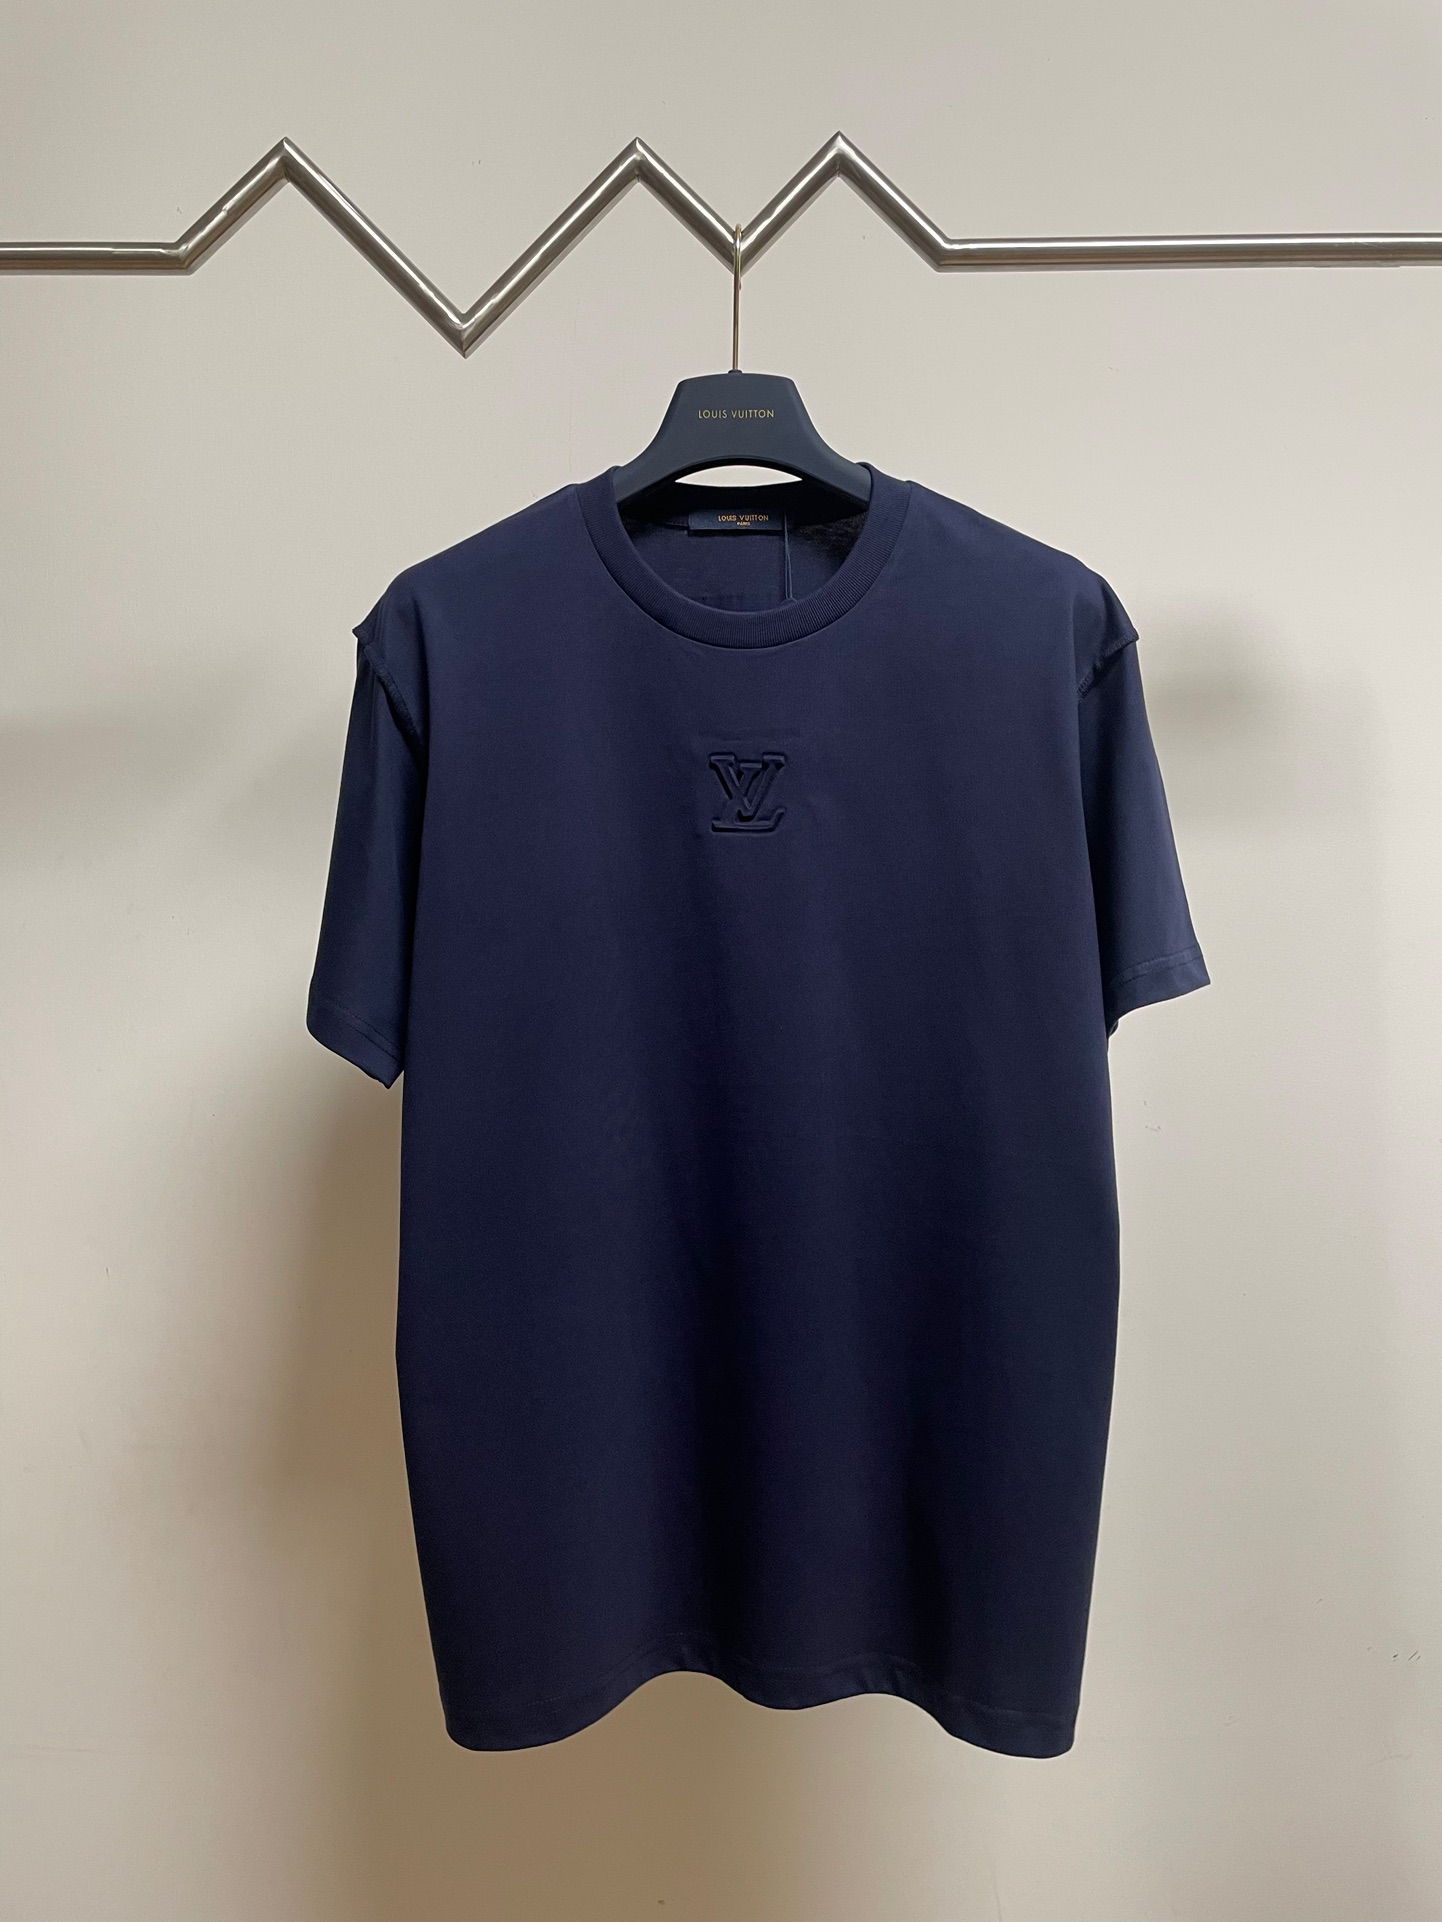 Louis Vuitton Clothing T-Shirt AAA Class Replica
 Unisex Cotton Spring/Summer Collection Short Sleeve